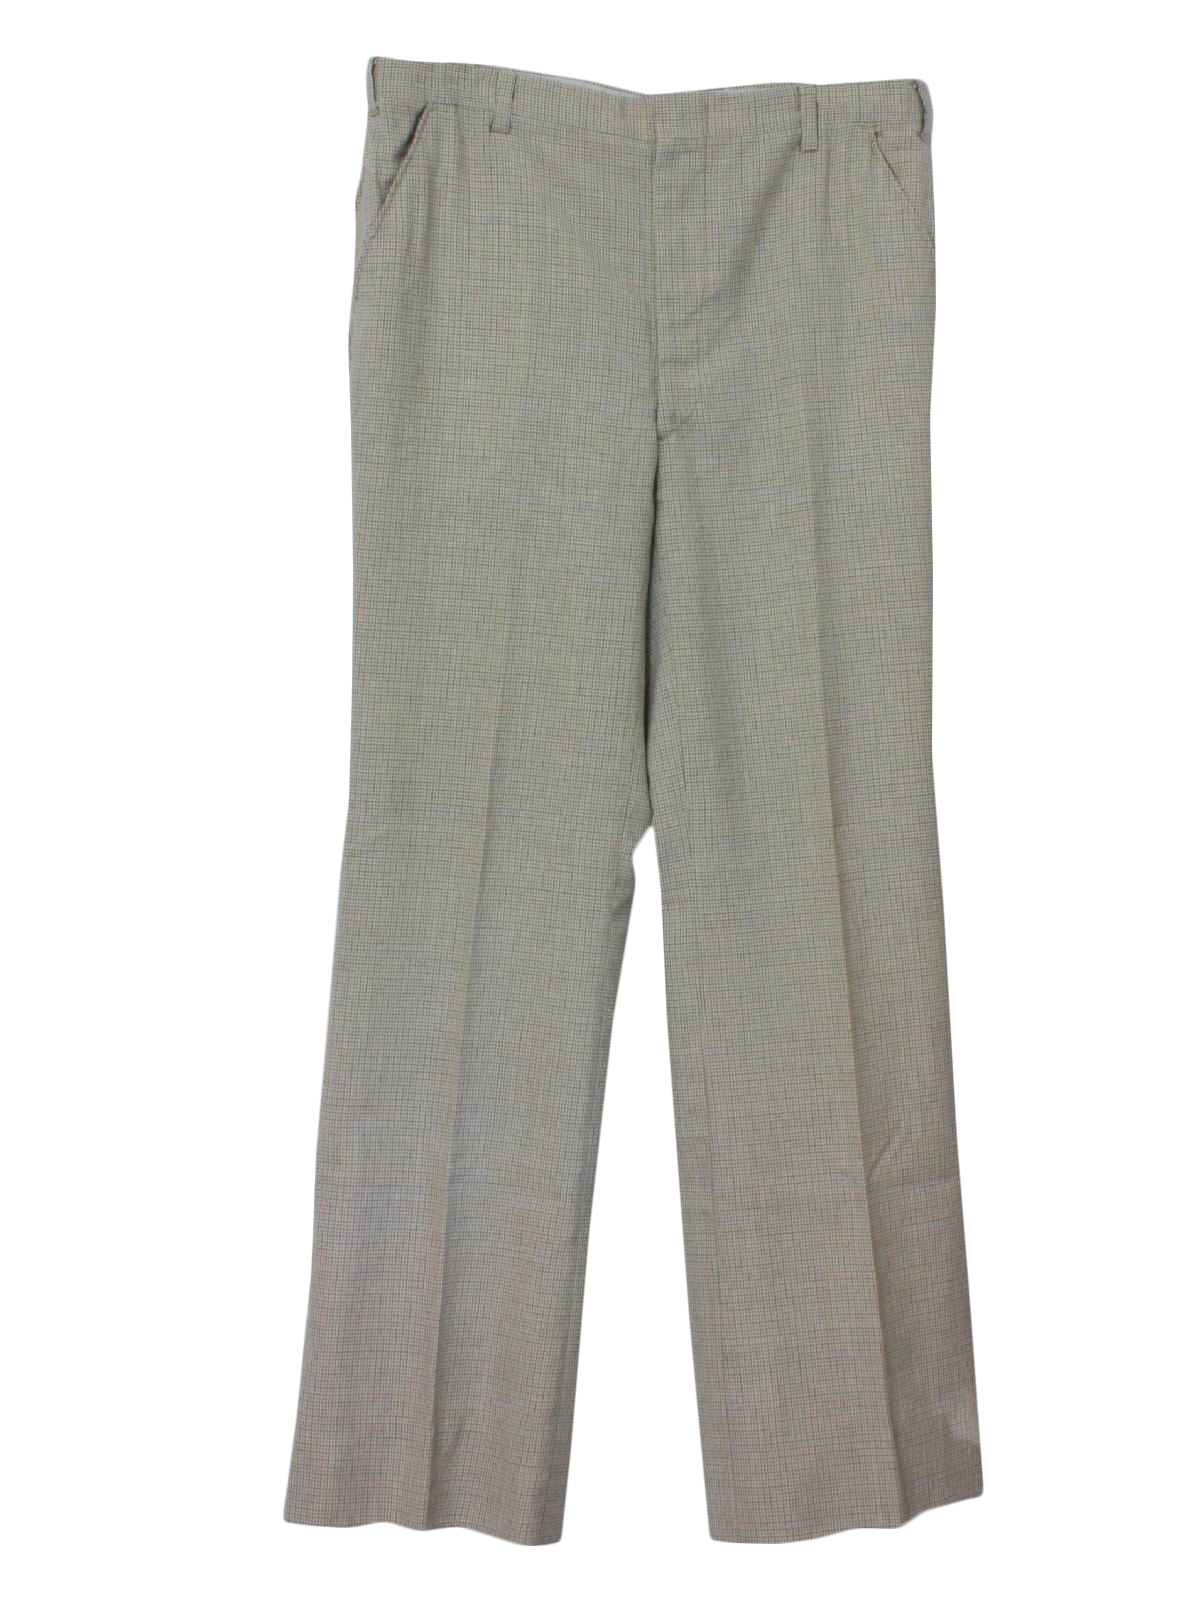 1970's Retro Flared Pants / Flares: 70s -Care Label- Mens cream, grey ...